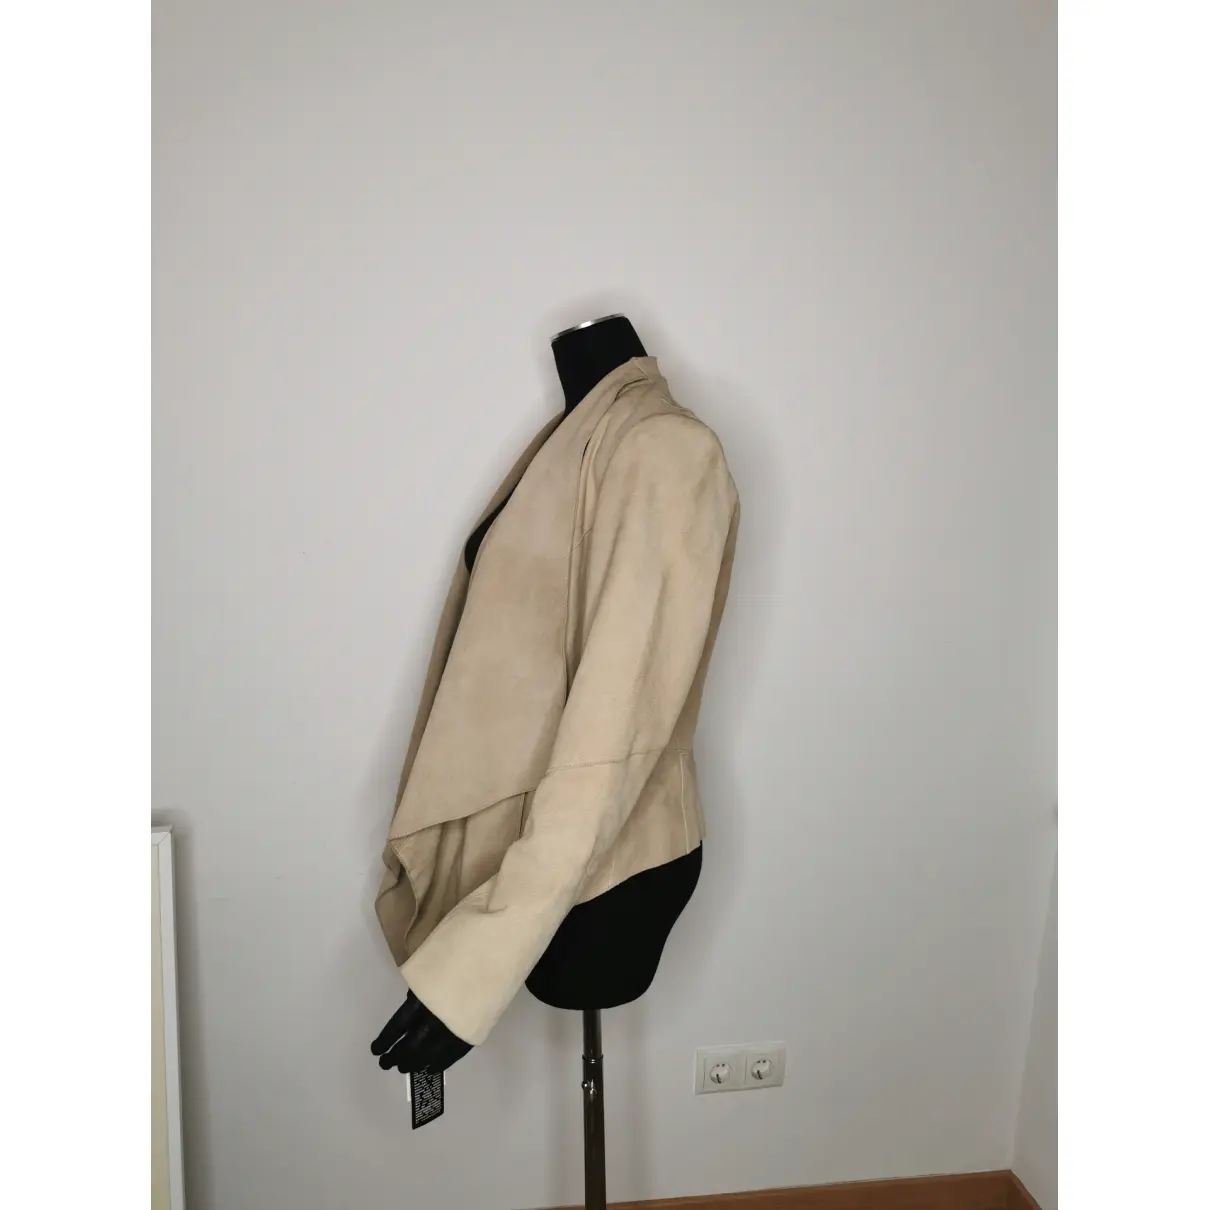 Buy Michael Kors Leather jacket online